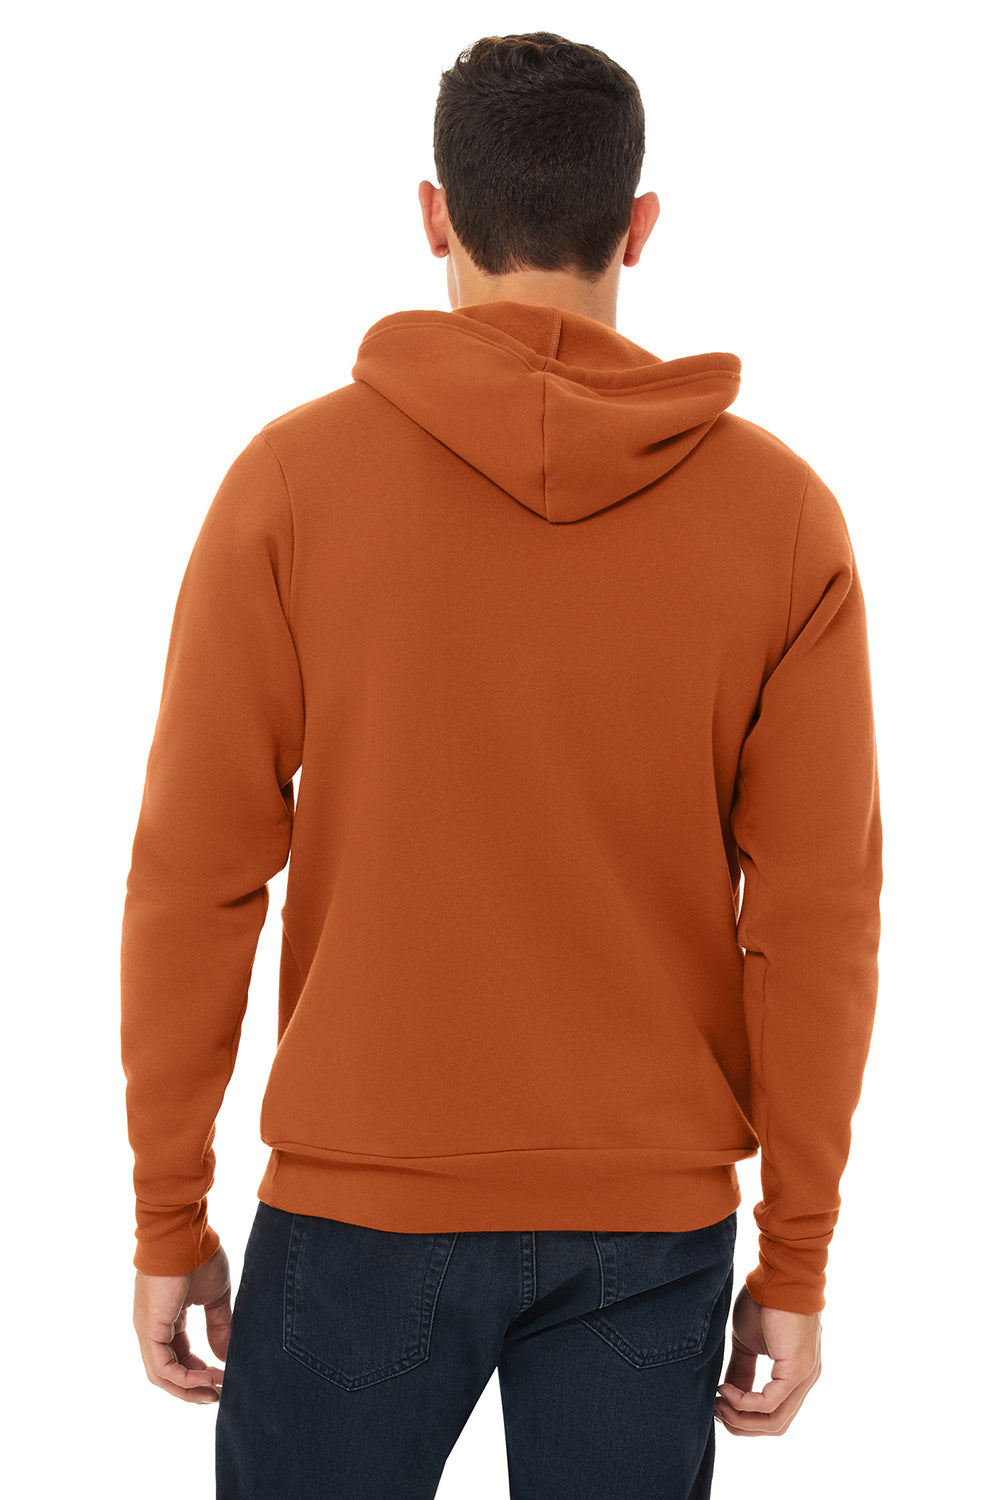 Bella + Canvas BC3719/3719 Mens Sponge Fleece Hooded Sweatshirt Hoodie Autumn Orange Model Back